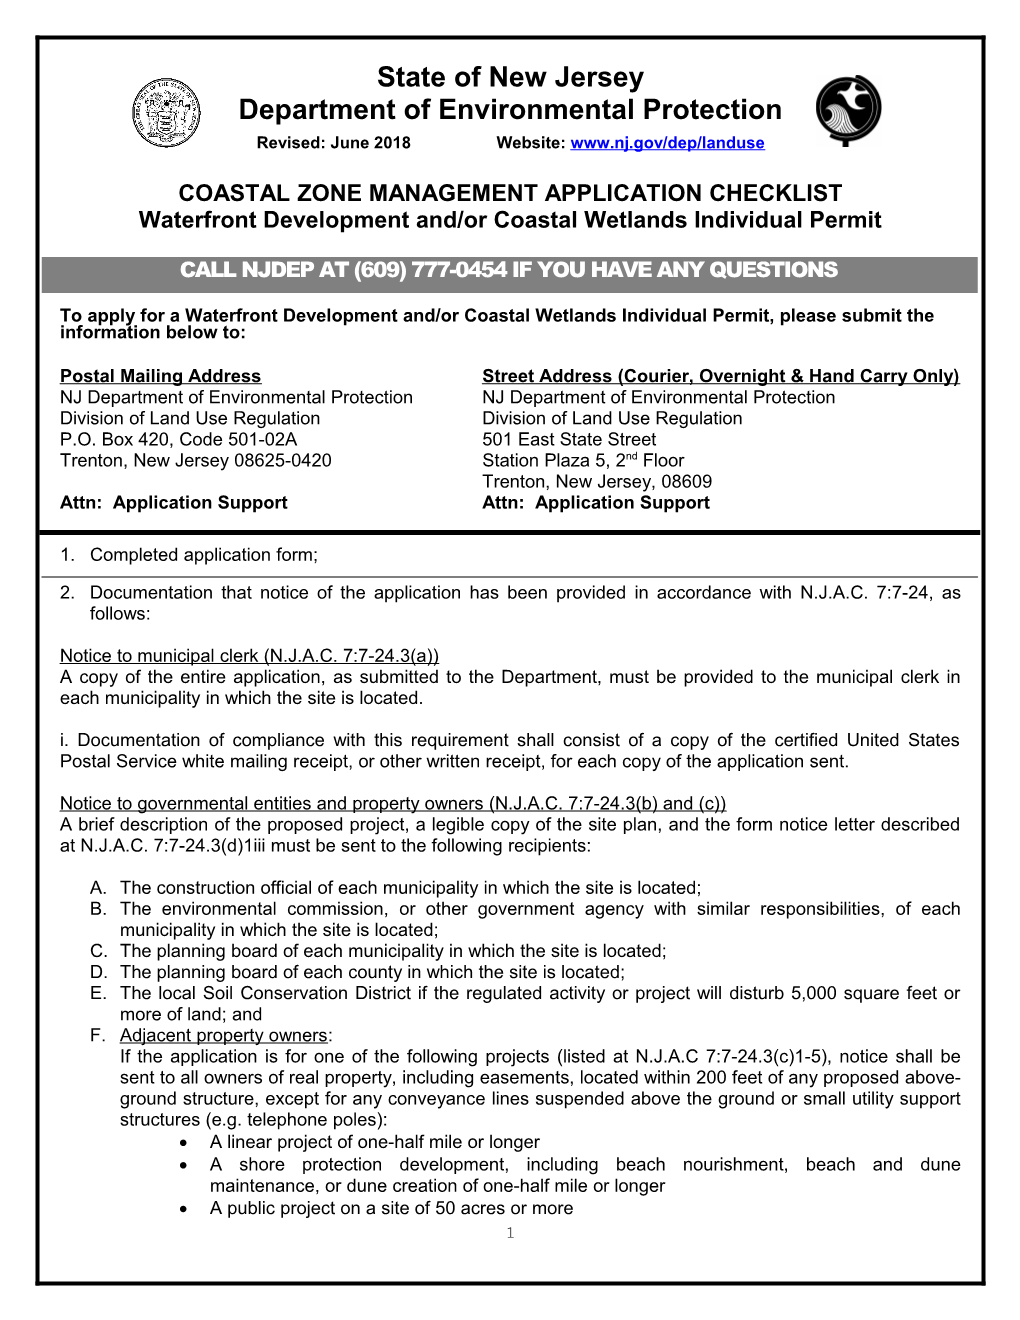 Coastal Zone Management Application Checklist